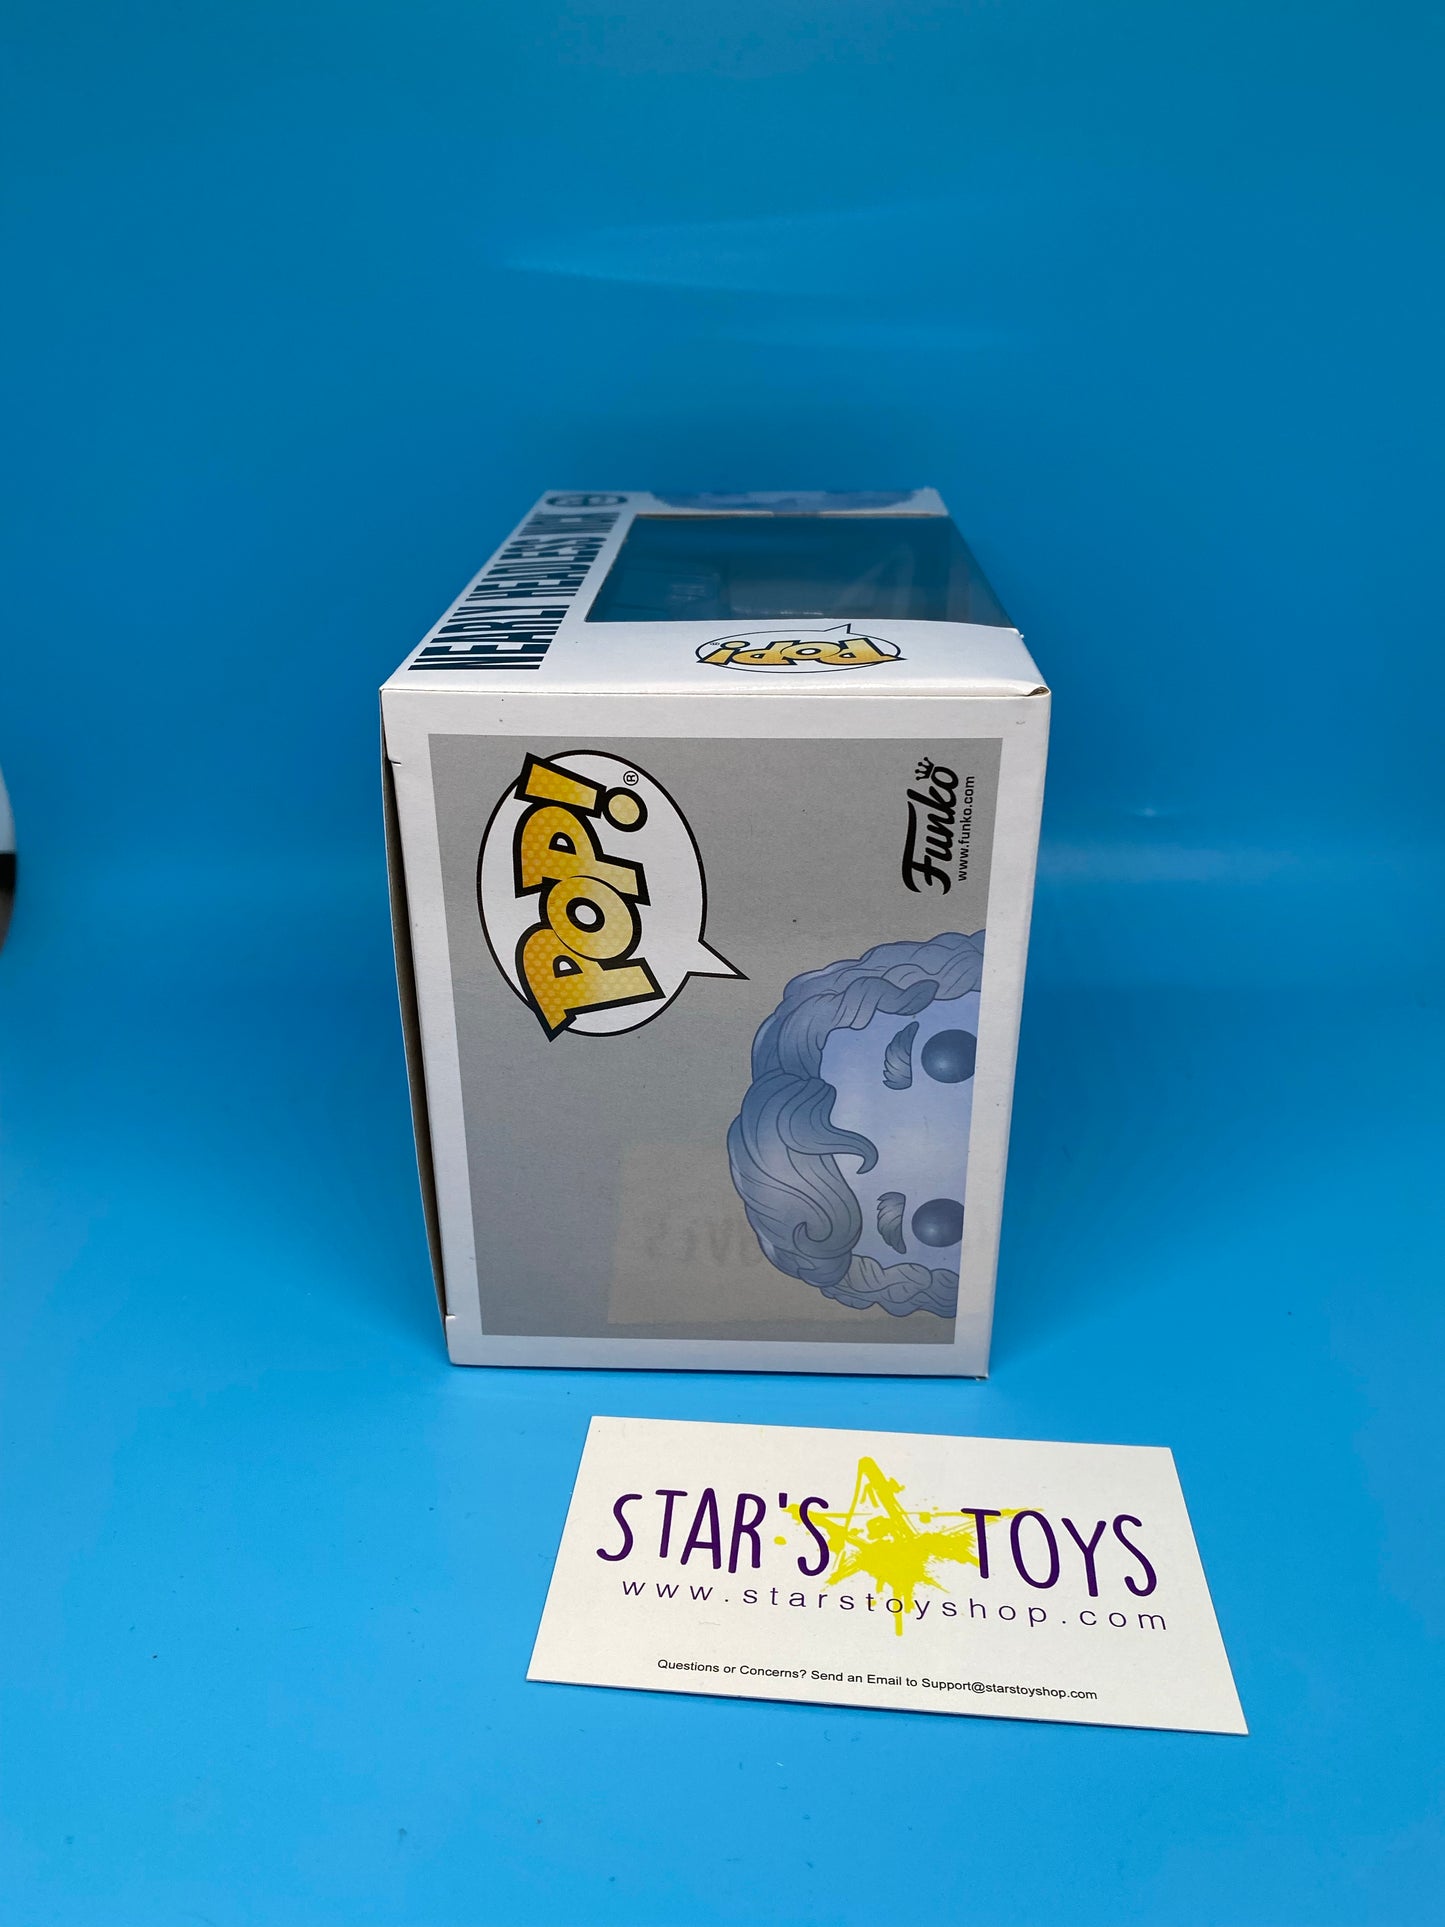 Pop HP: POP 56 Nearly Headless Nick (GW) - Star's Toy Shop